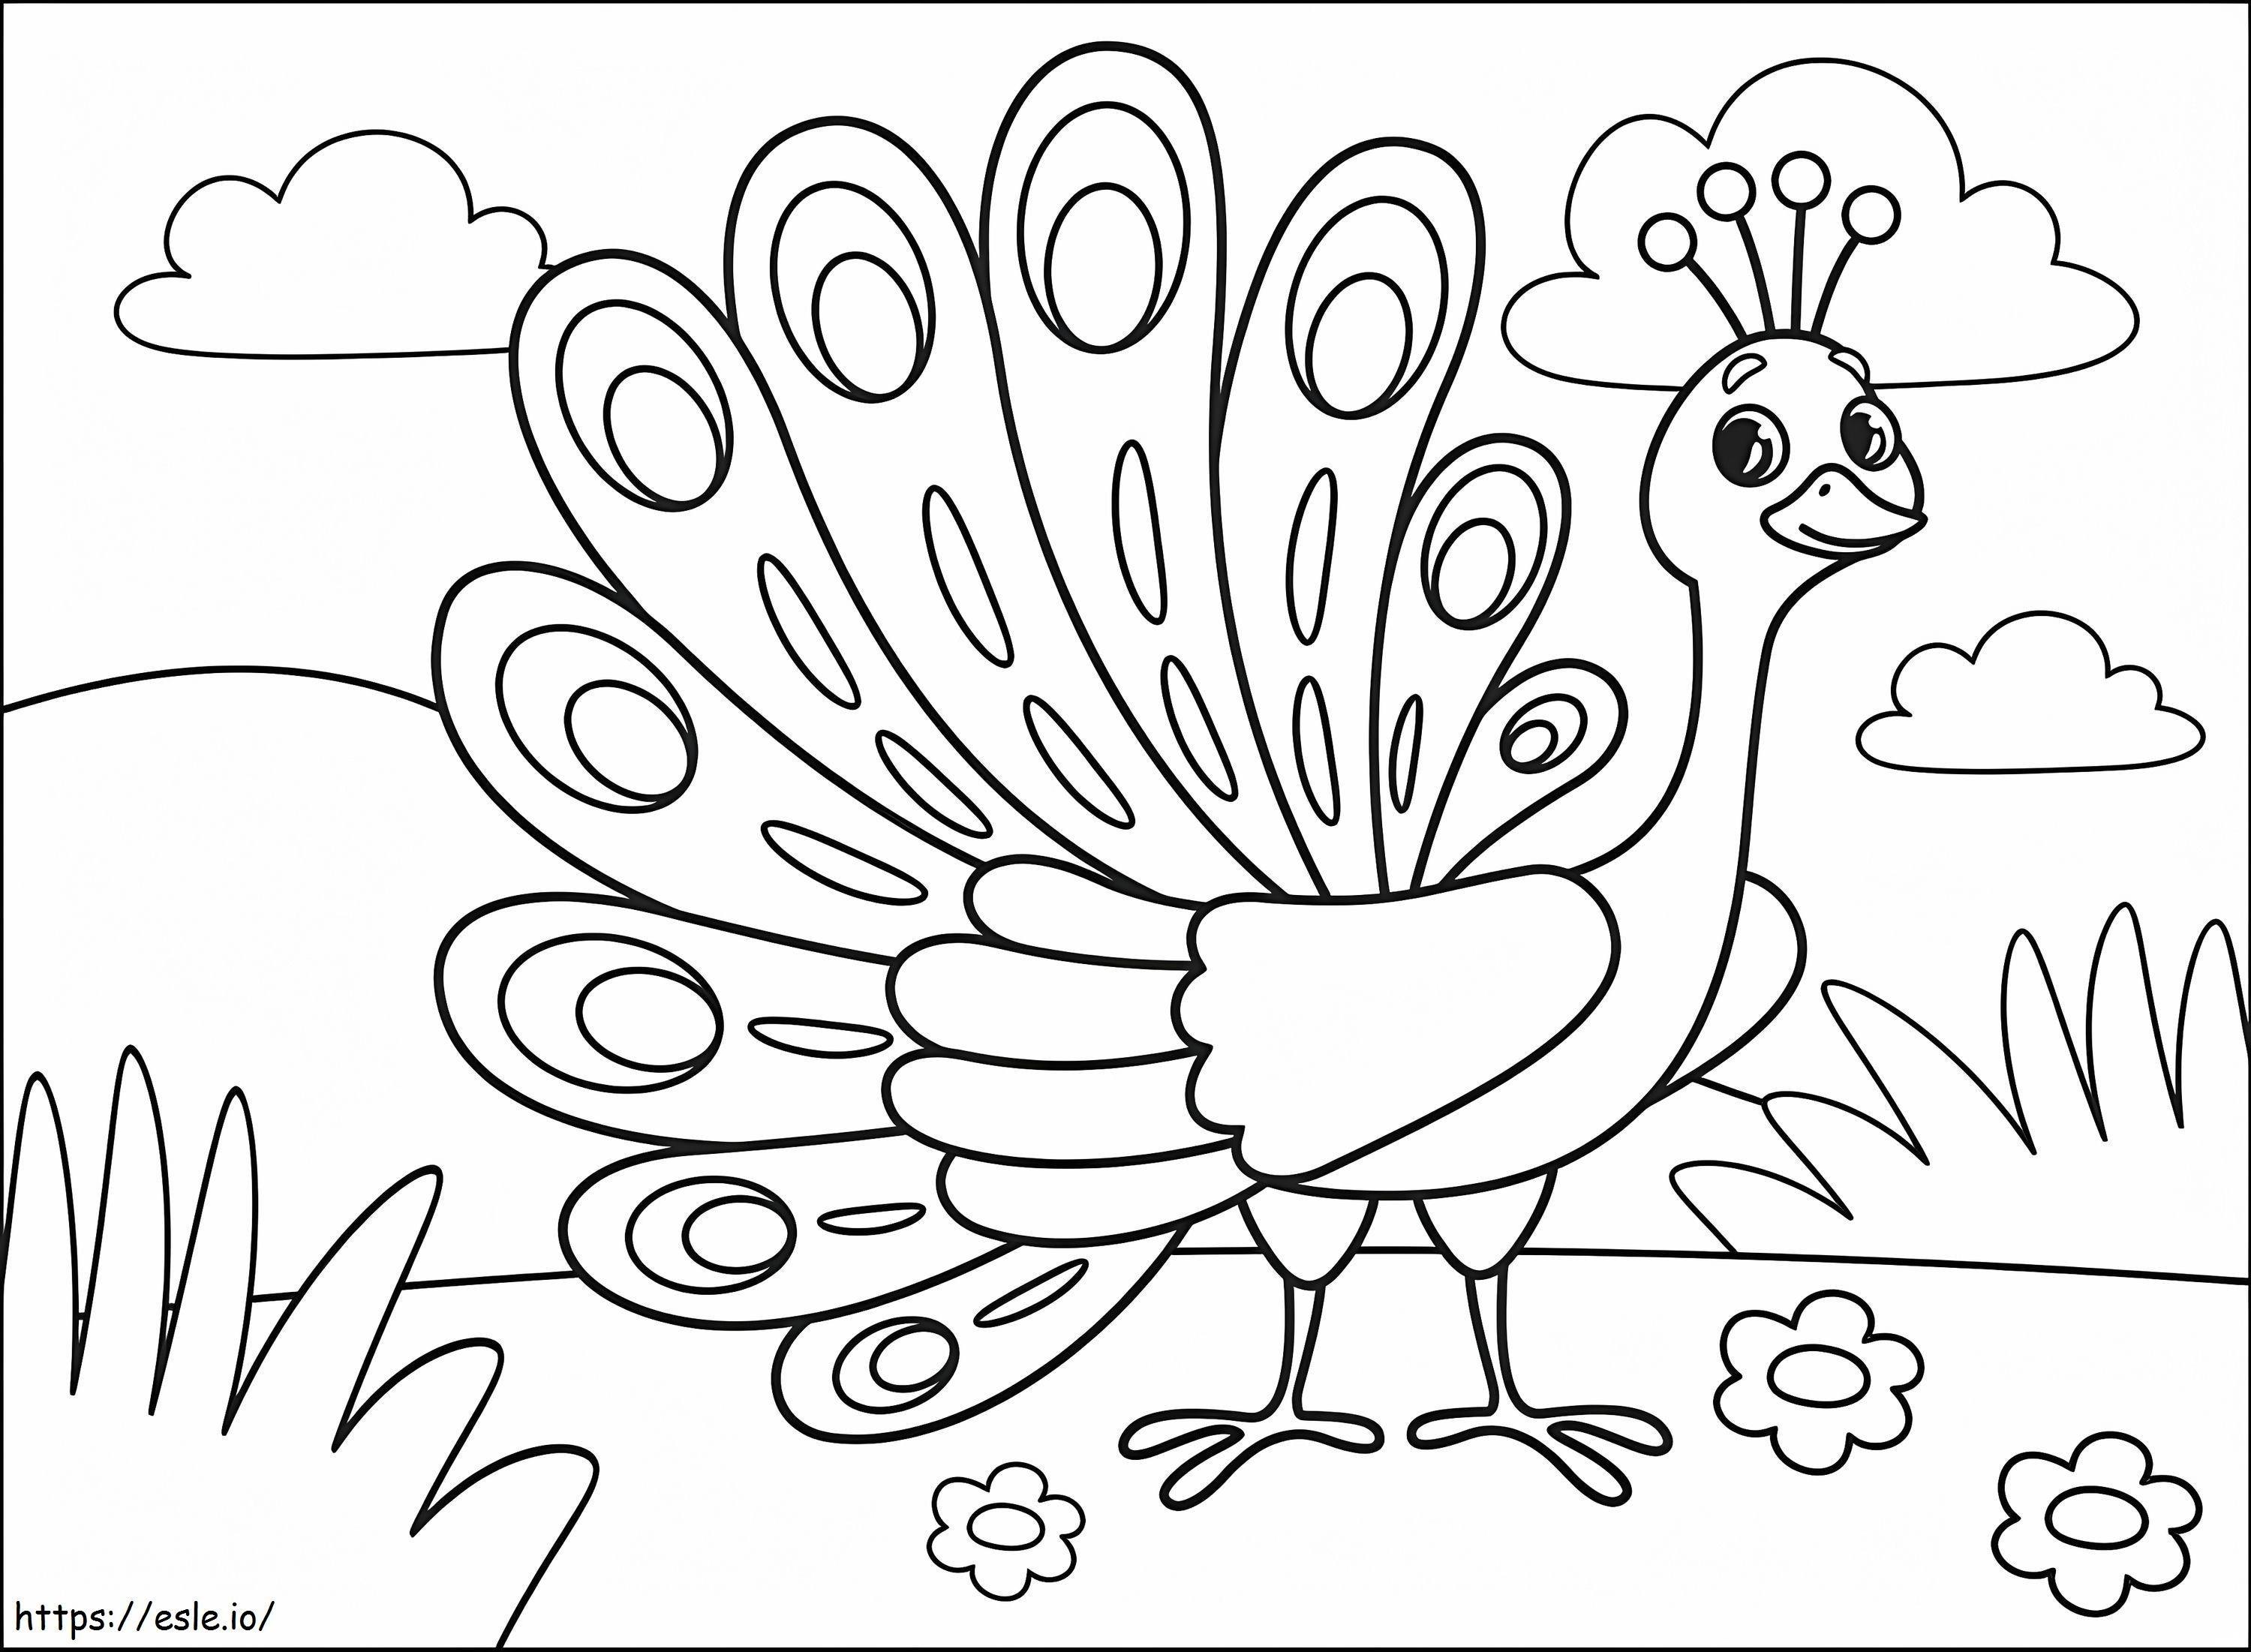 Happy Peacock coloring page